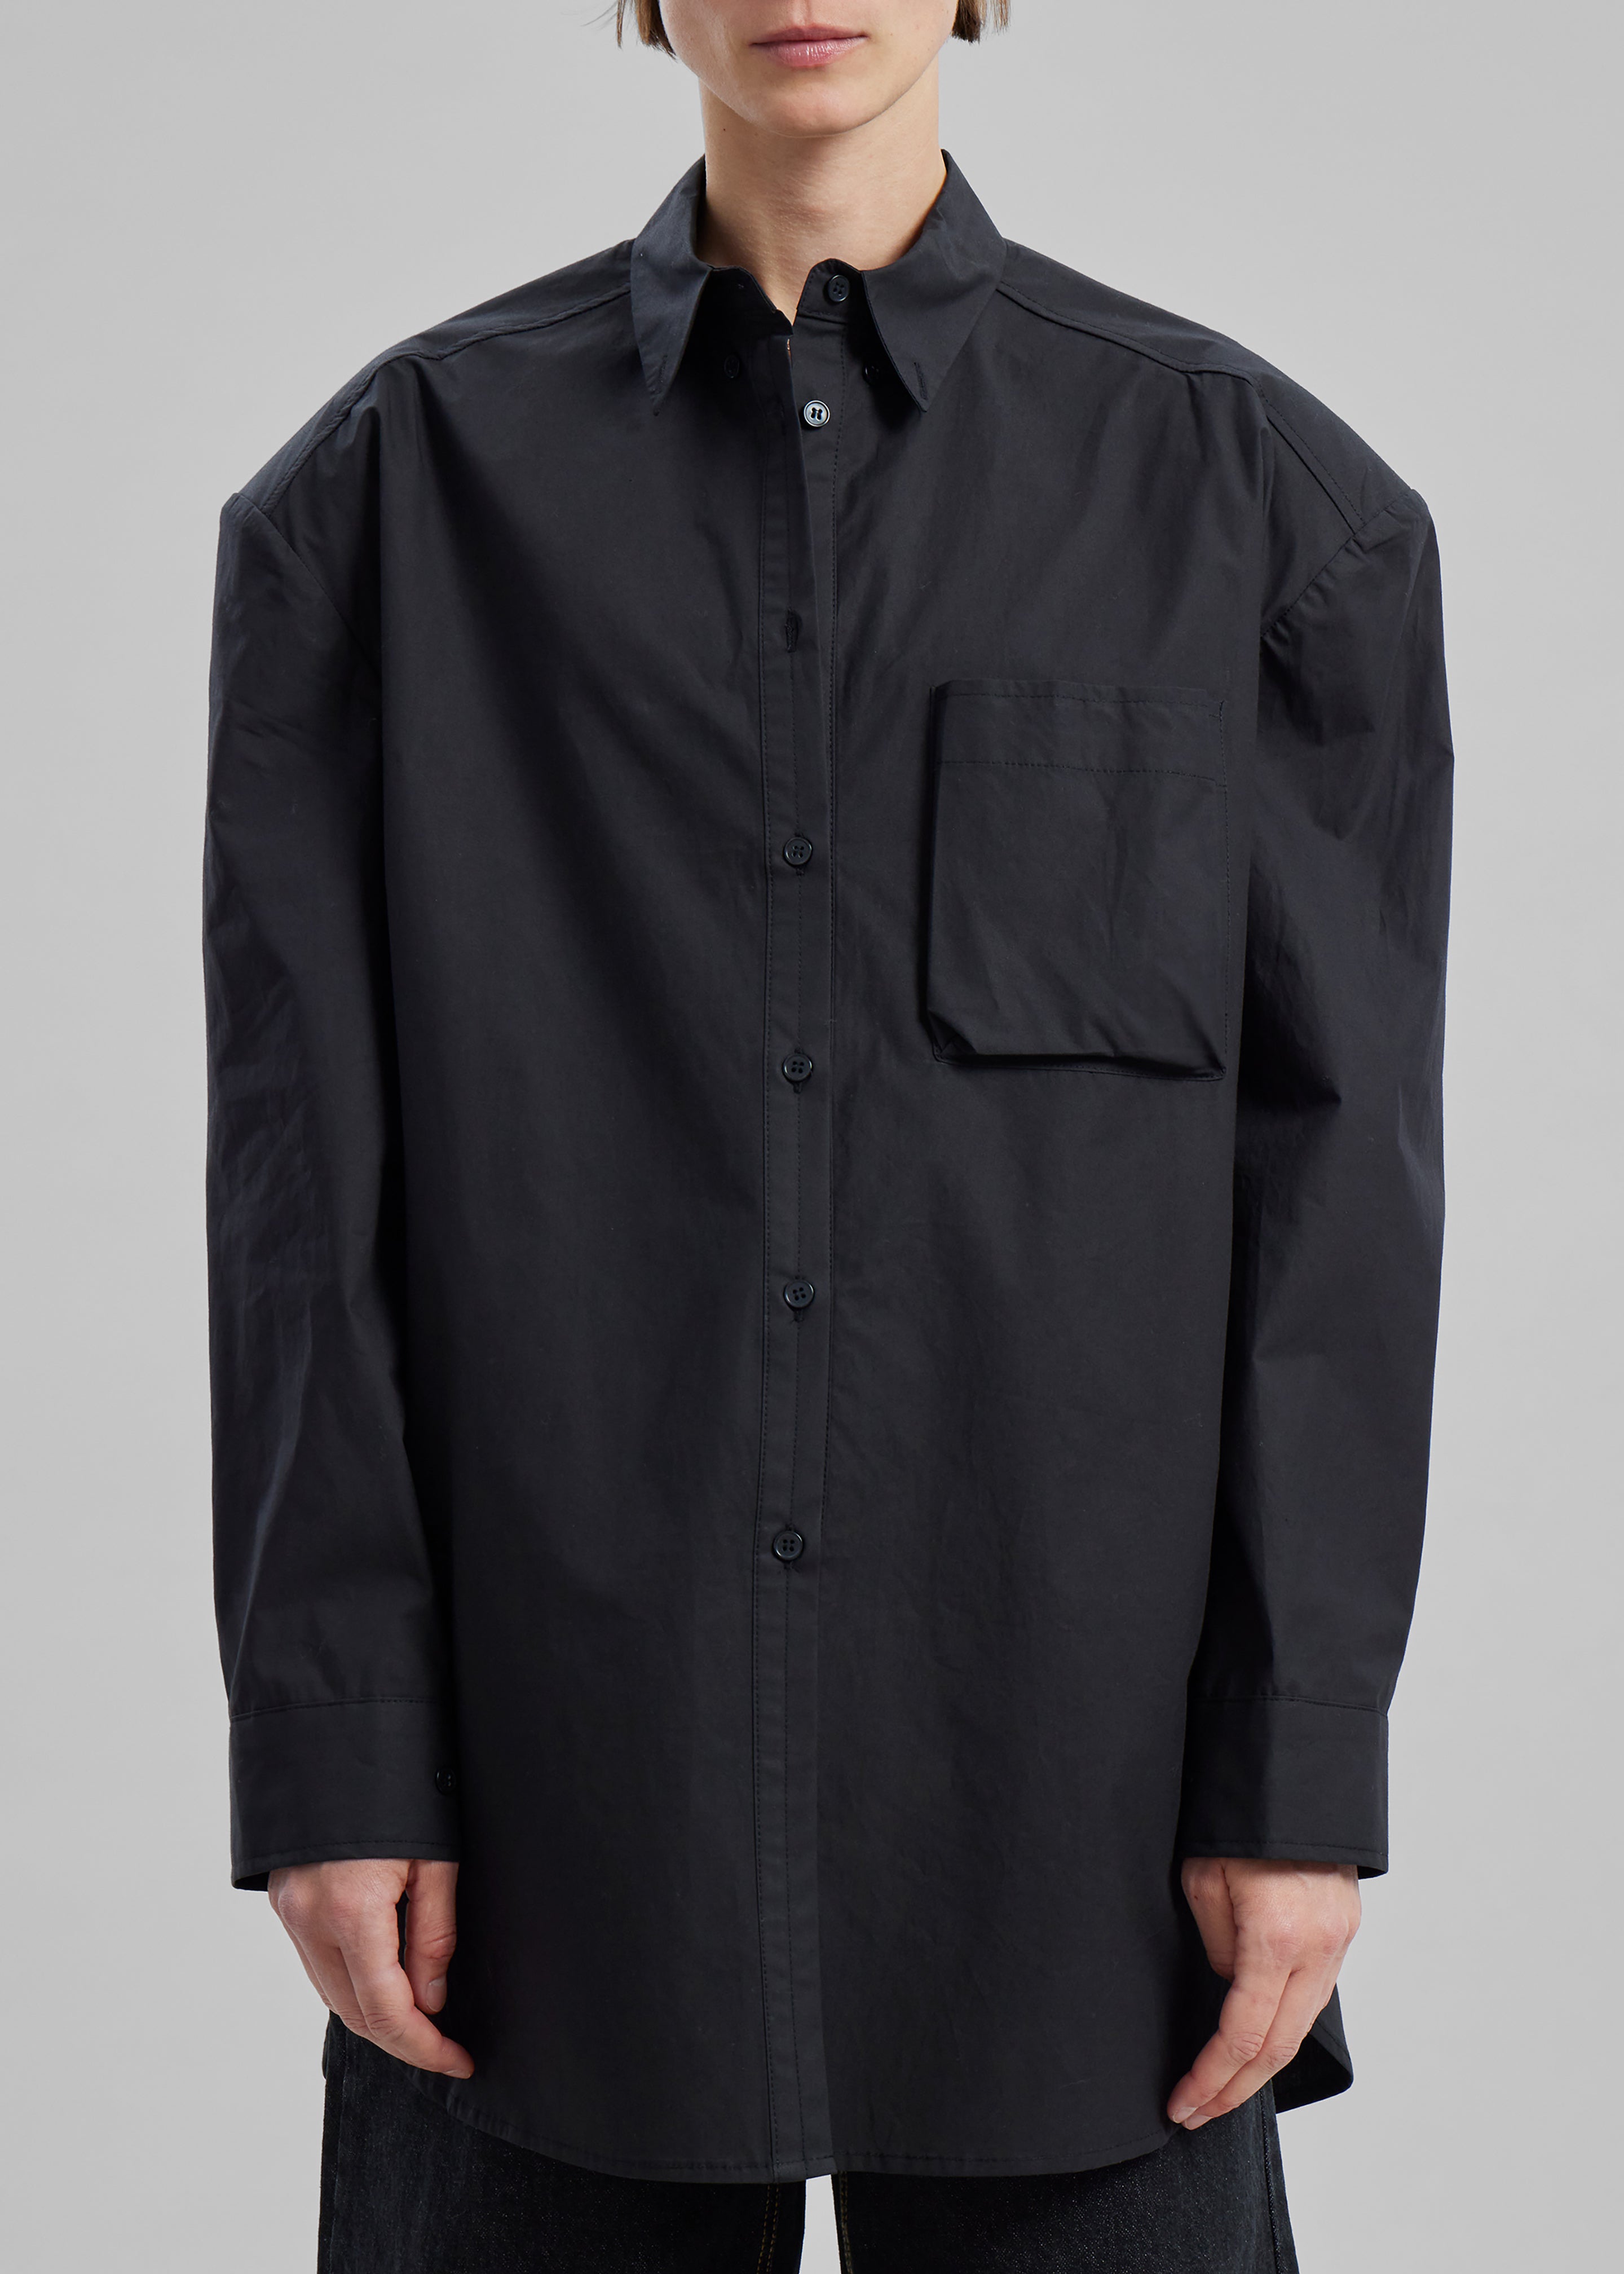 Brenna Padded Button Up Shirt - Black - 3